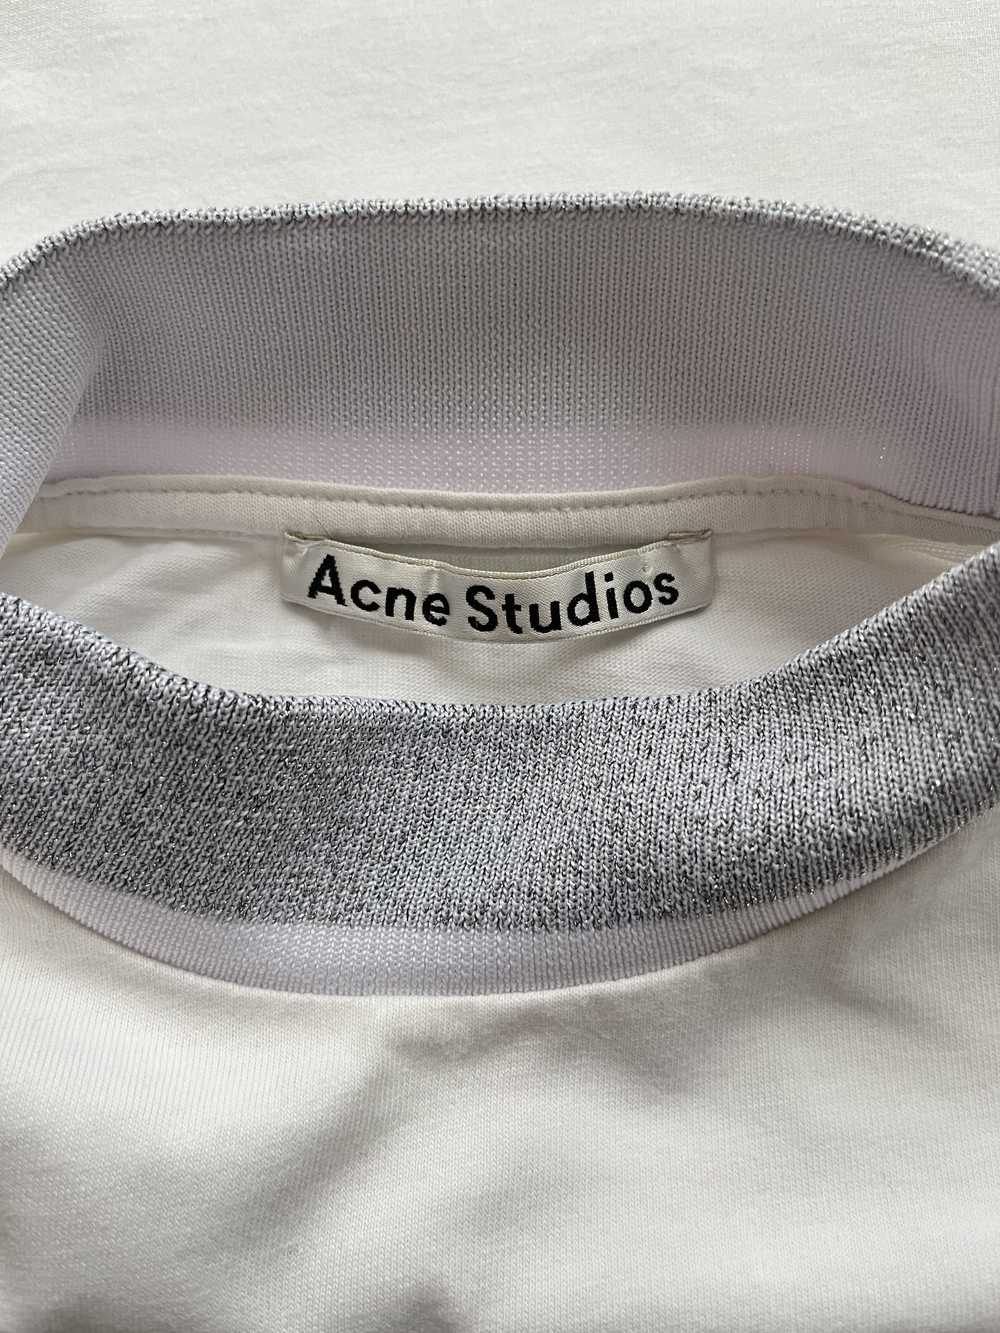 Acne Studios ⚡️QUICK SALE⚡️2017 Acne Studios Whit… - image 3